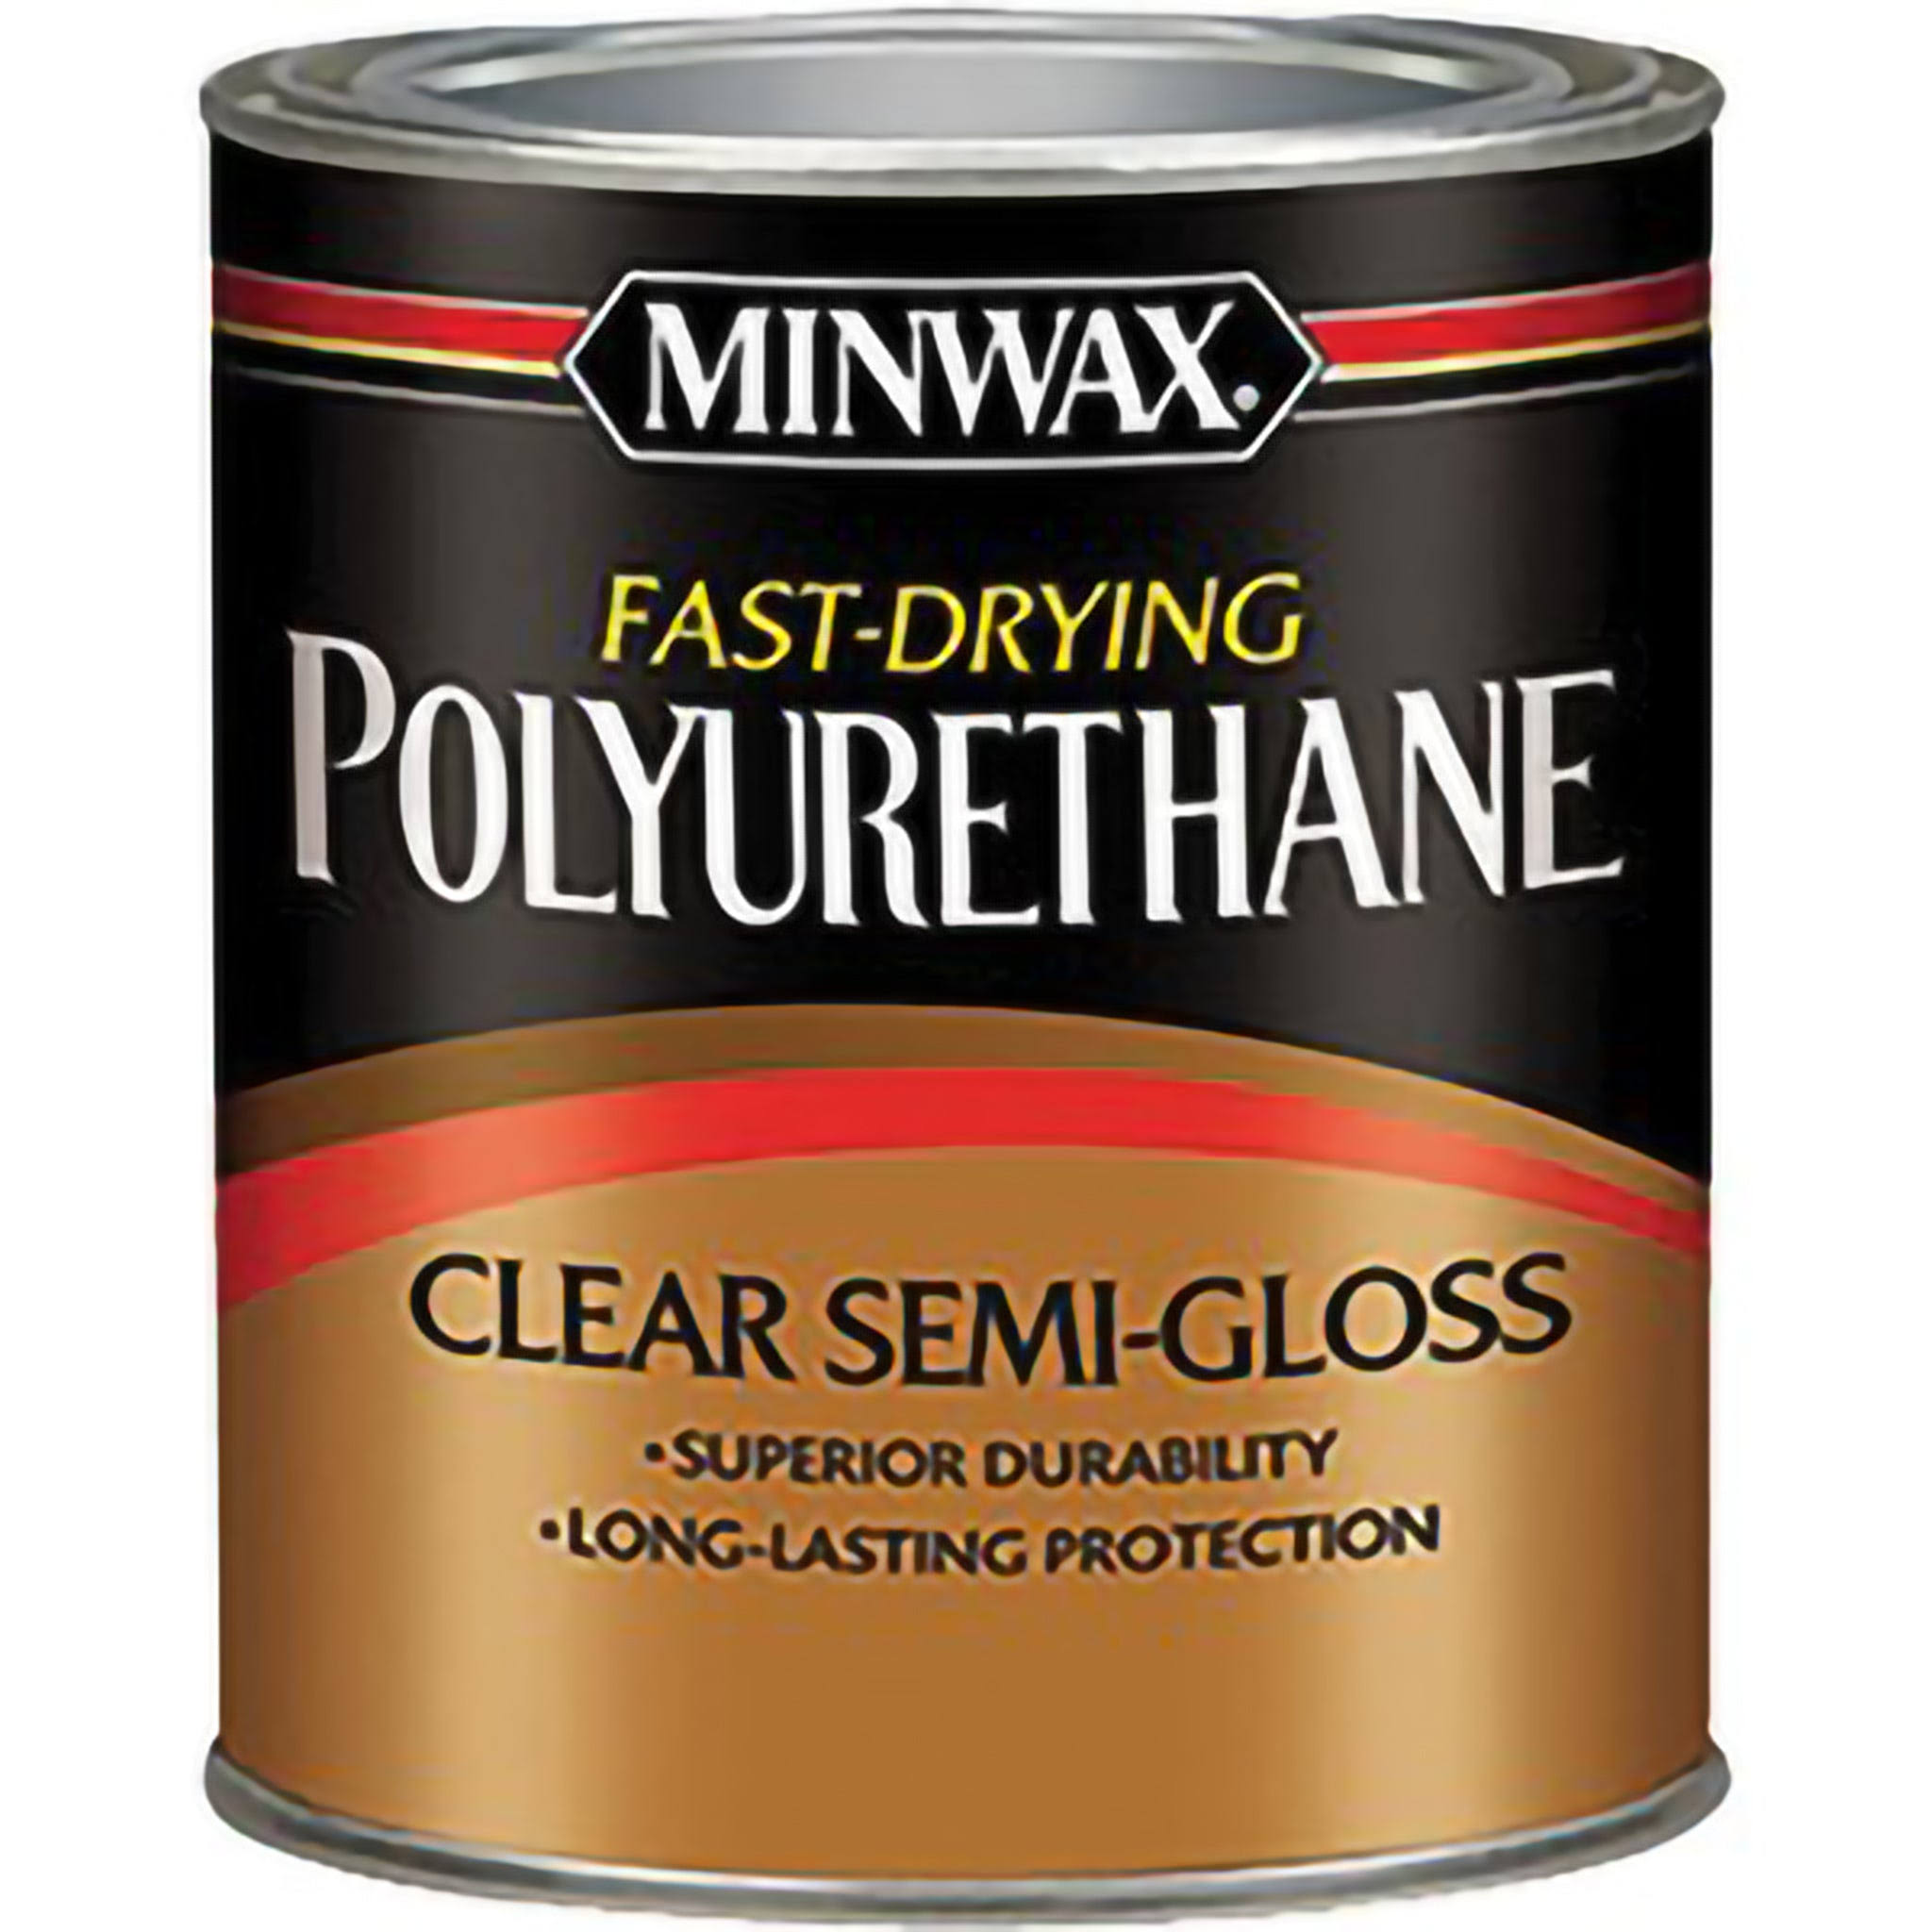 Minwax Polyurethane - Clear Semi-Gloss